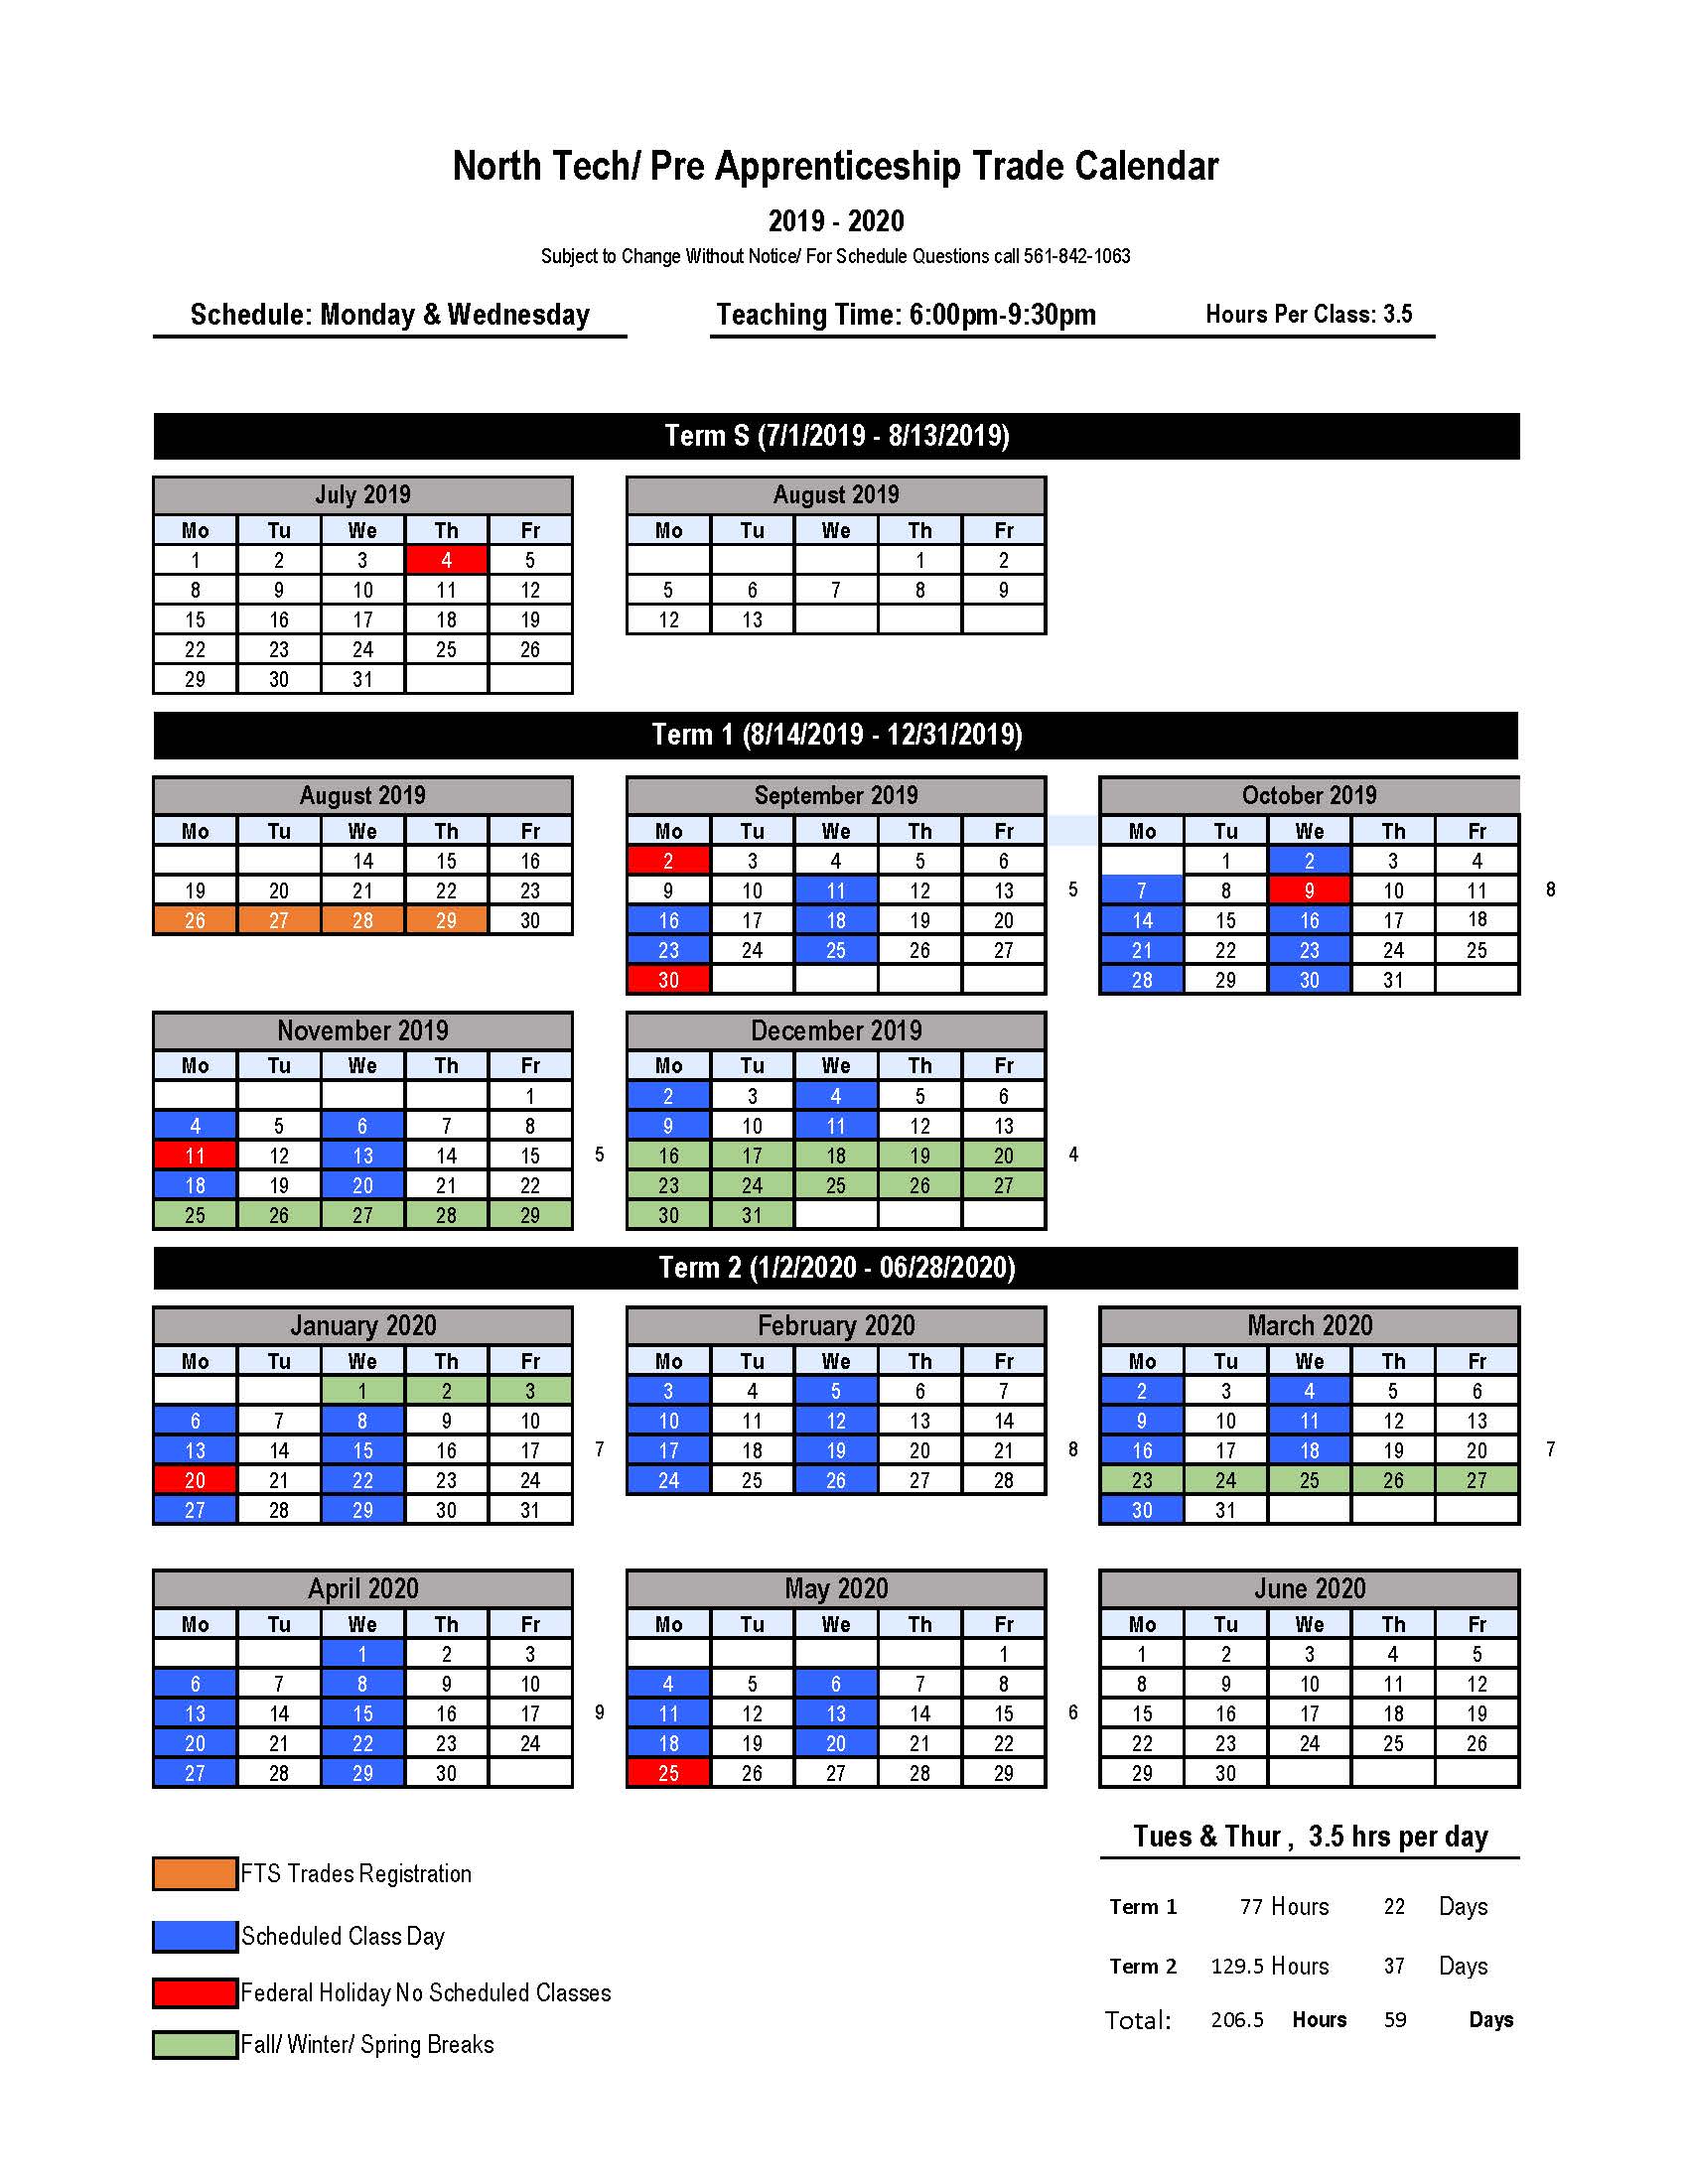 North Tech 2019-2020 Calendar